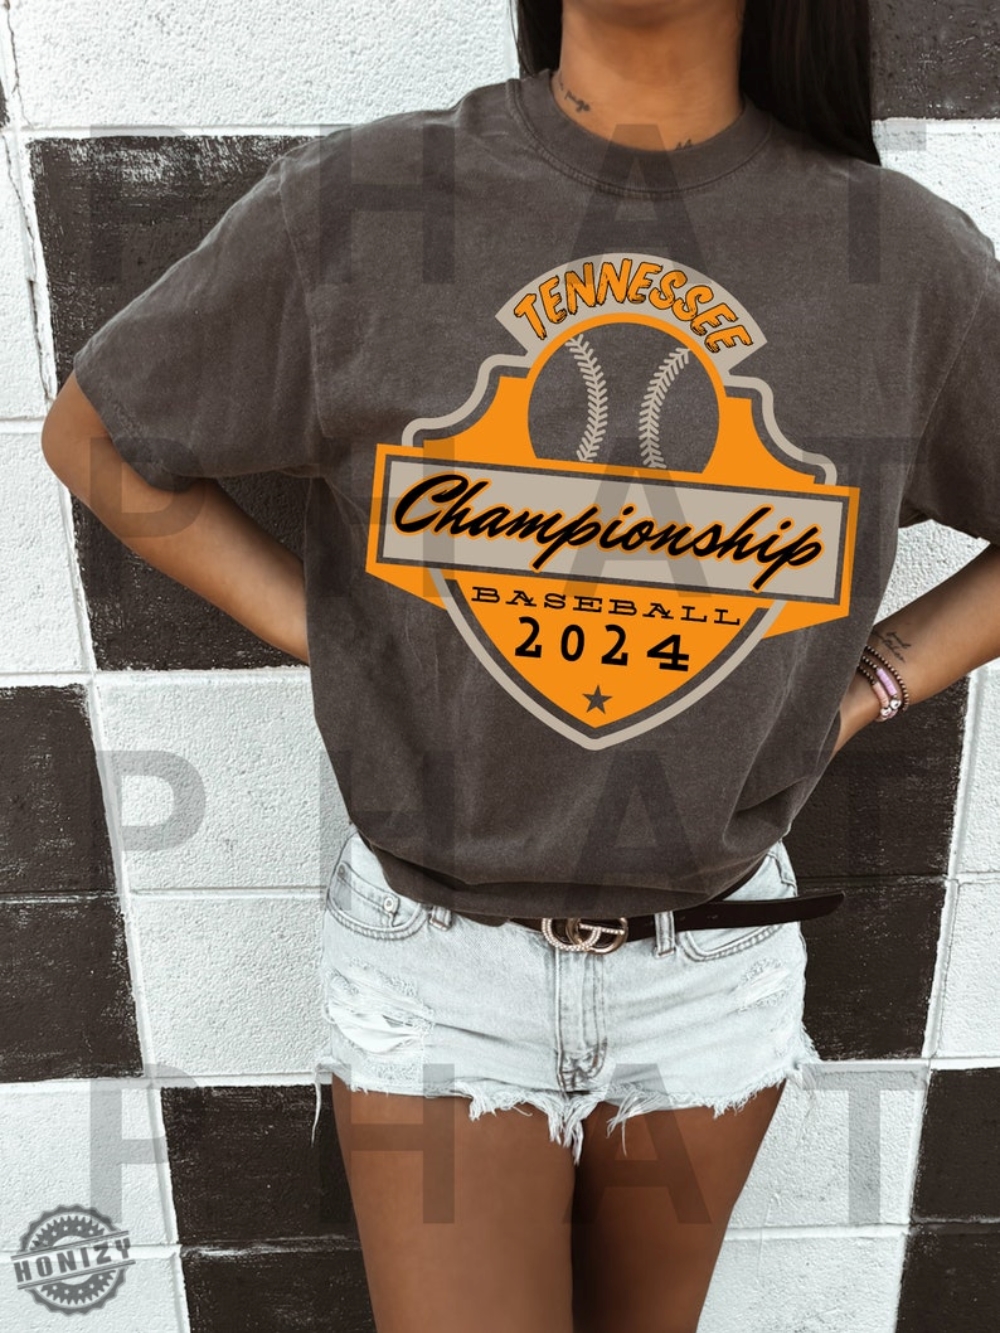 Tennessee Baseball Championship 2024 Shirt